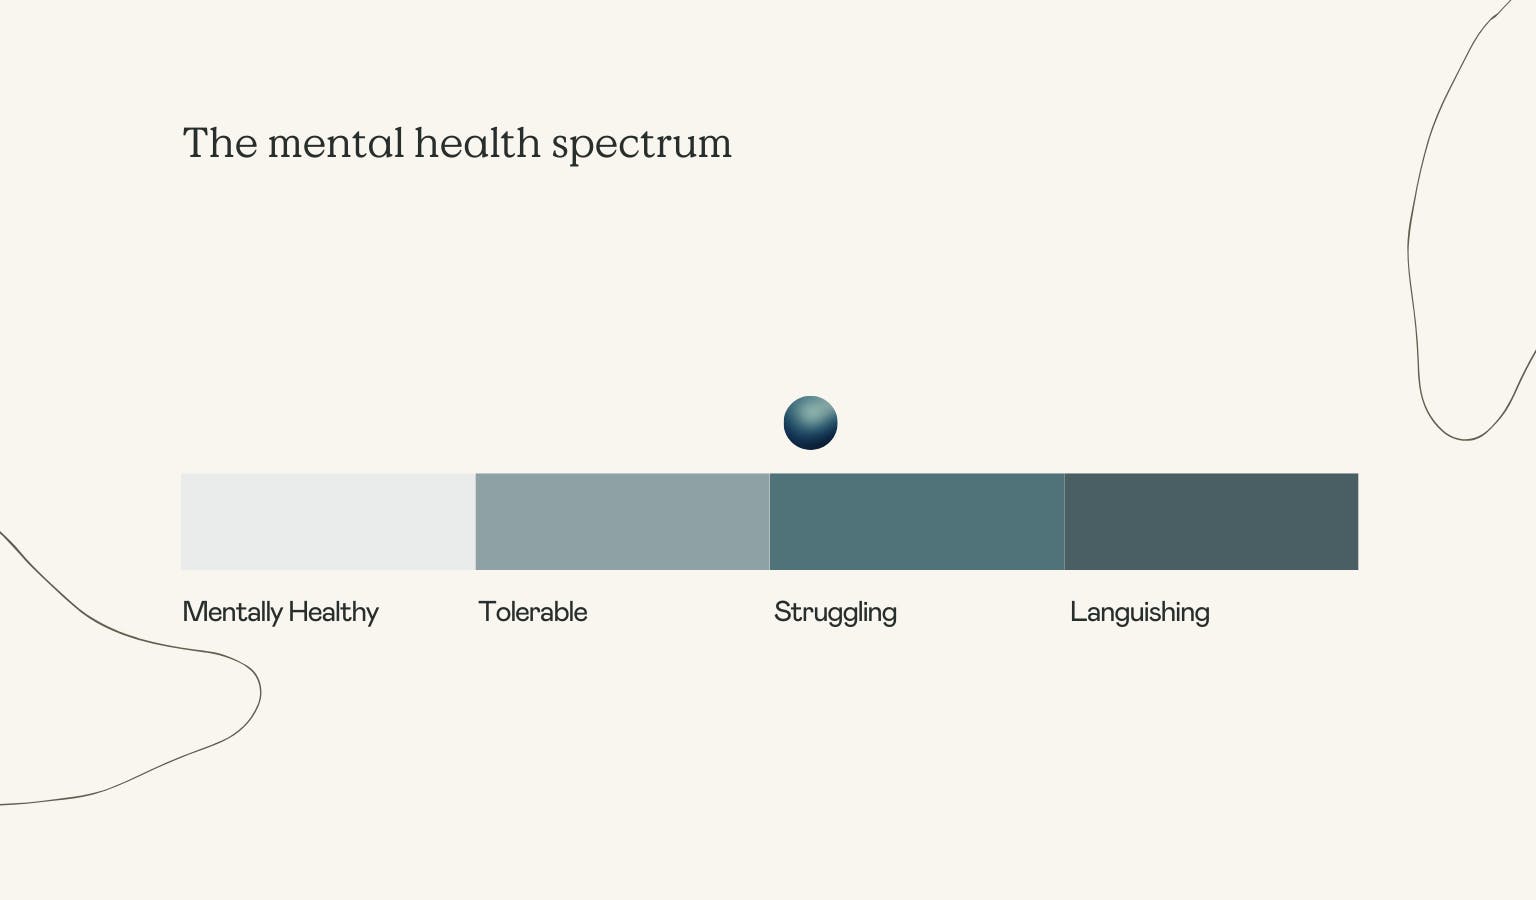 The Mental Health Spectrum by Frankie Health